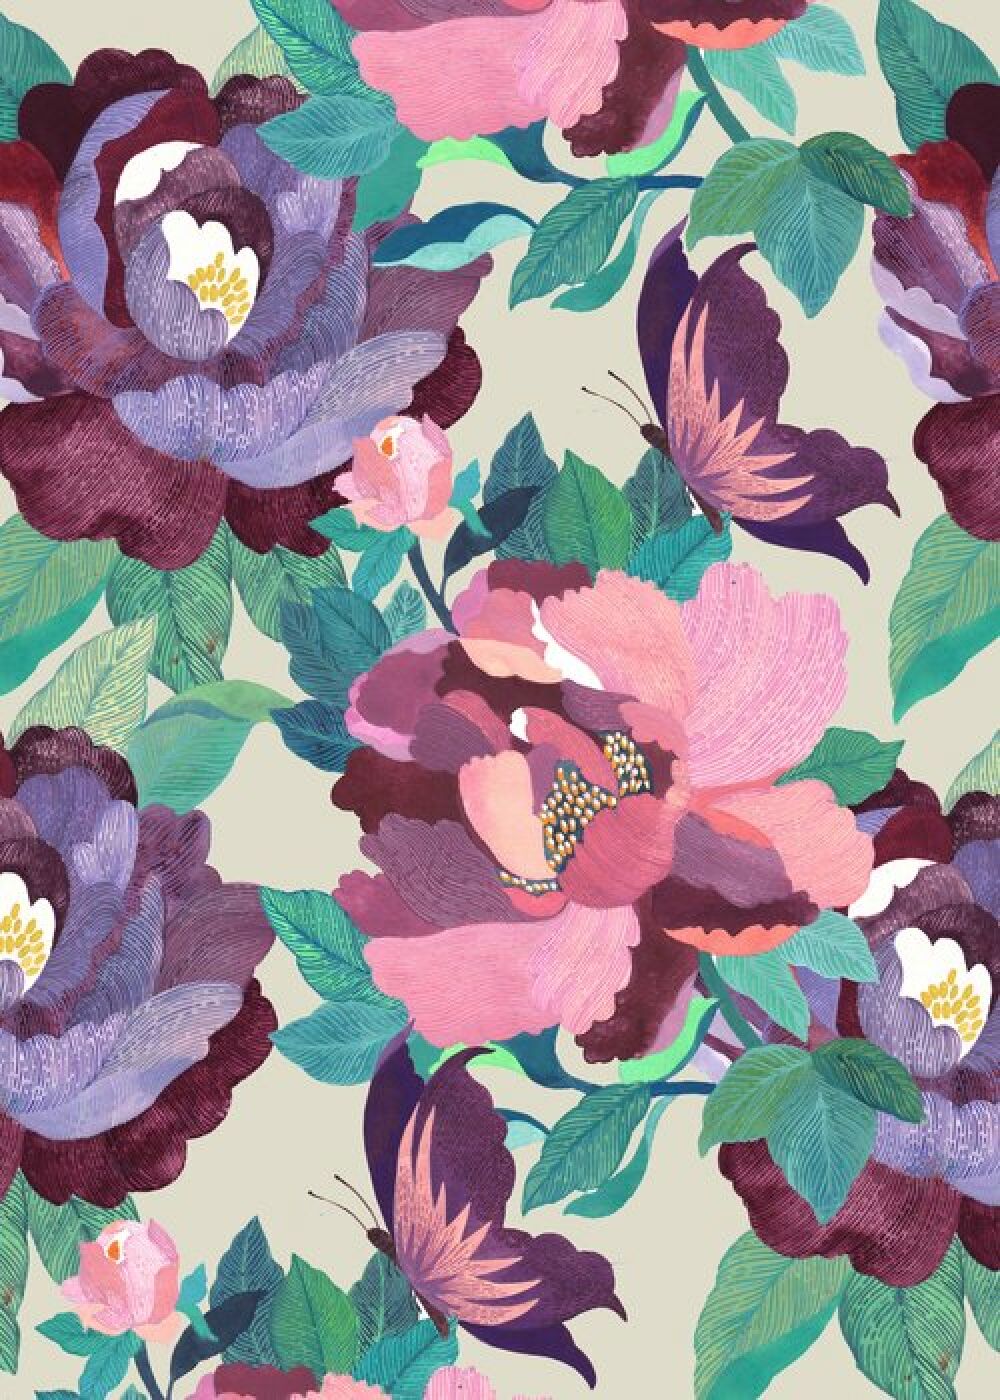 Flower pattern, painted by the illustration artist Malin Gyllensvaan